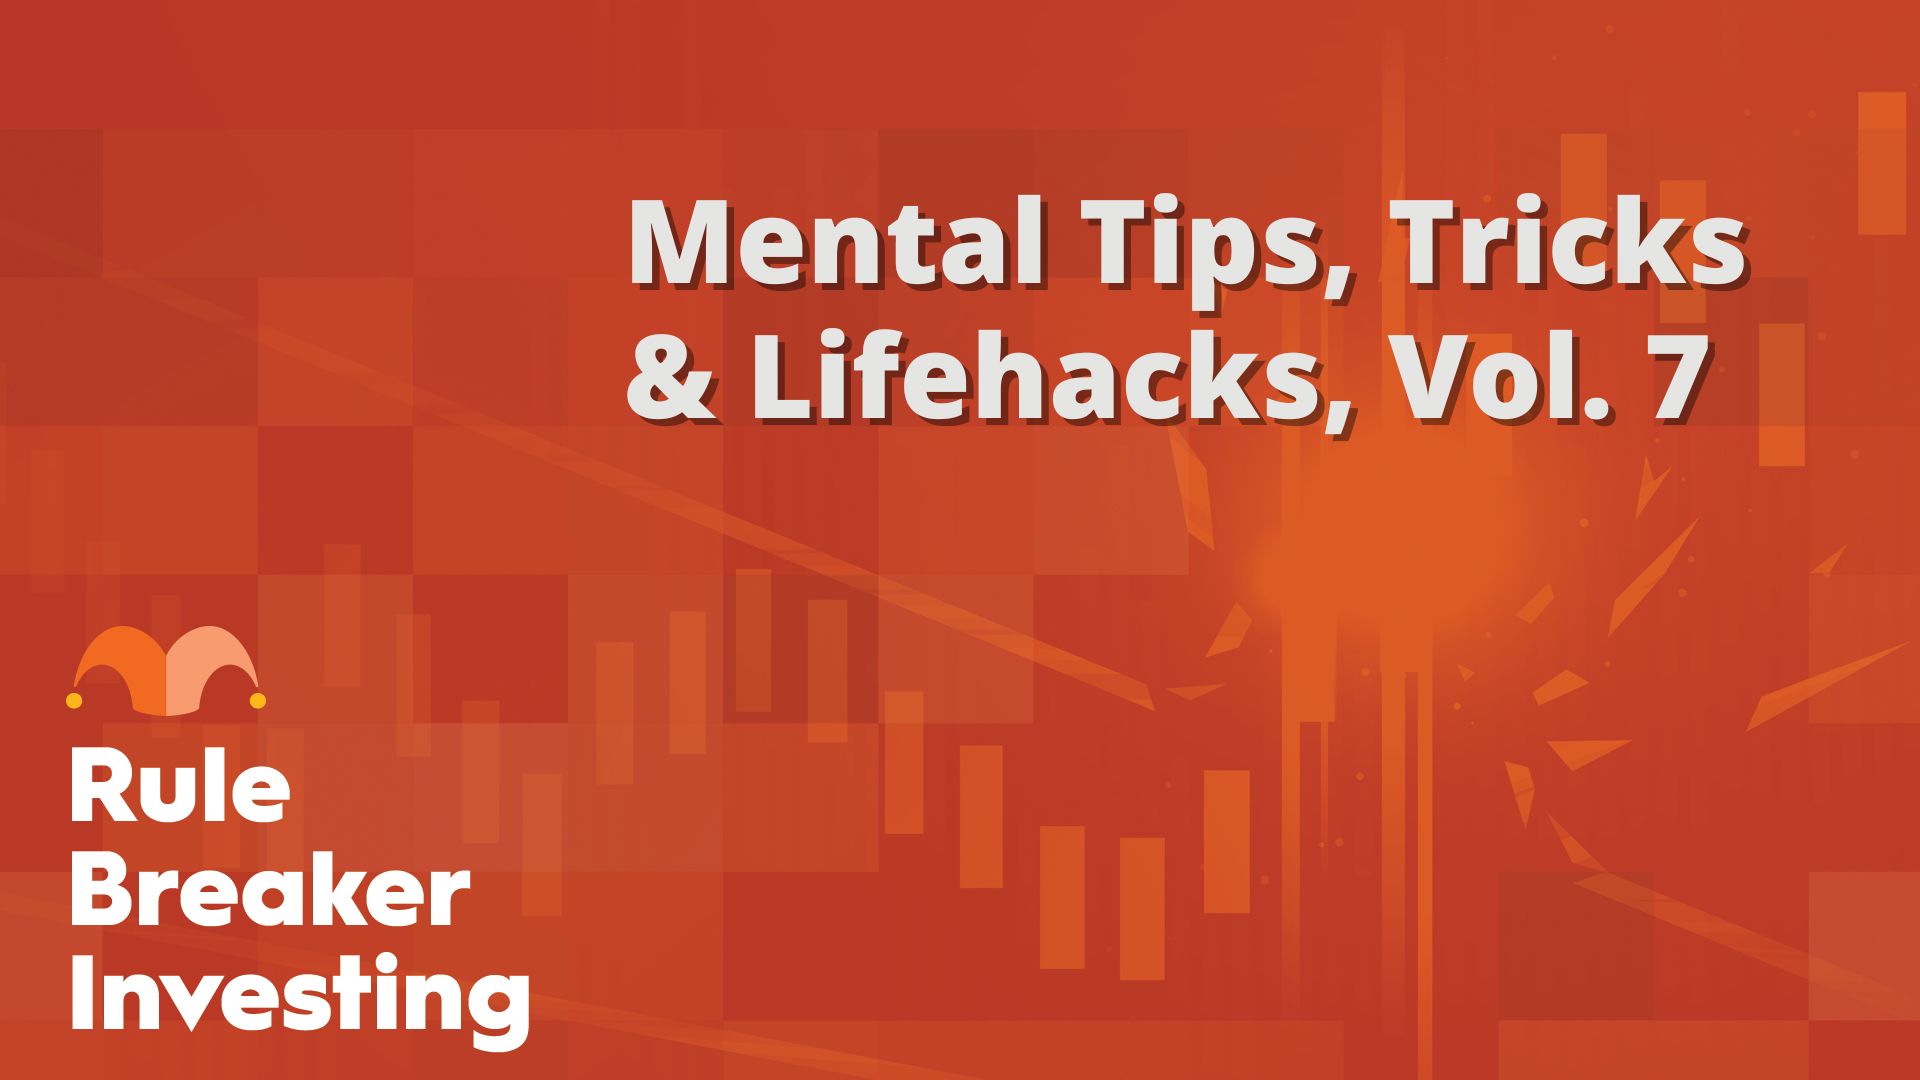 Rule Breaker Investing: Mental Tips, Tricks & Life Hacks, Vol. 7 | The Motley Fool